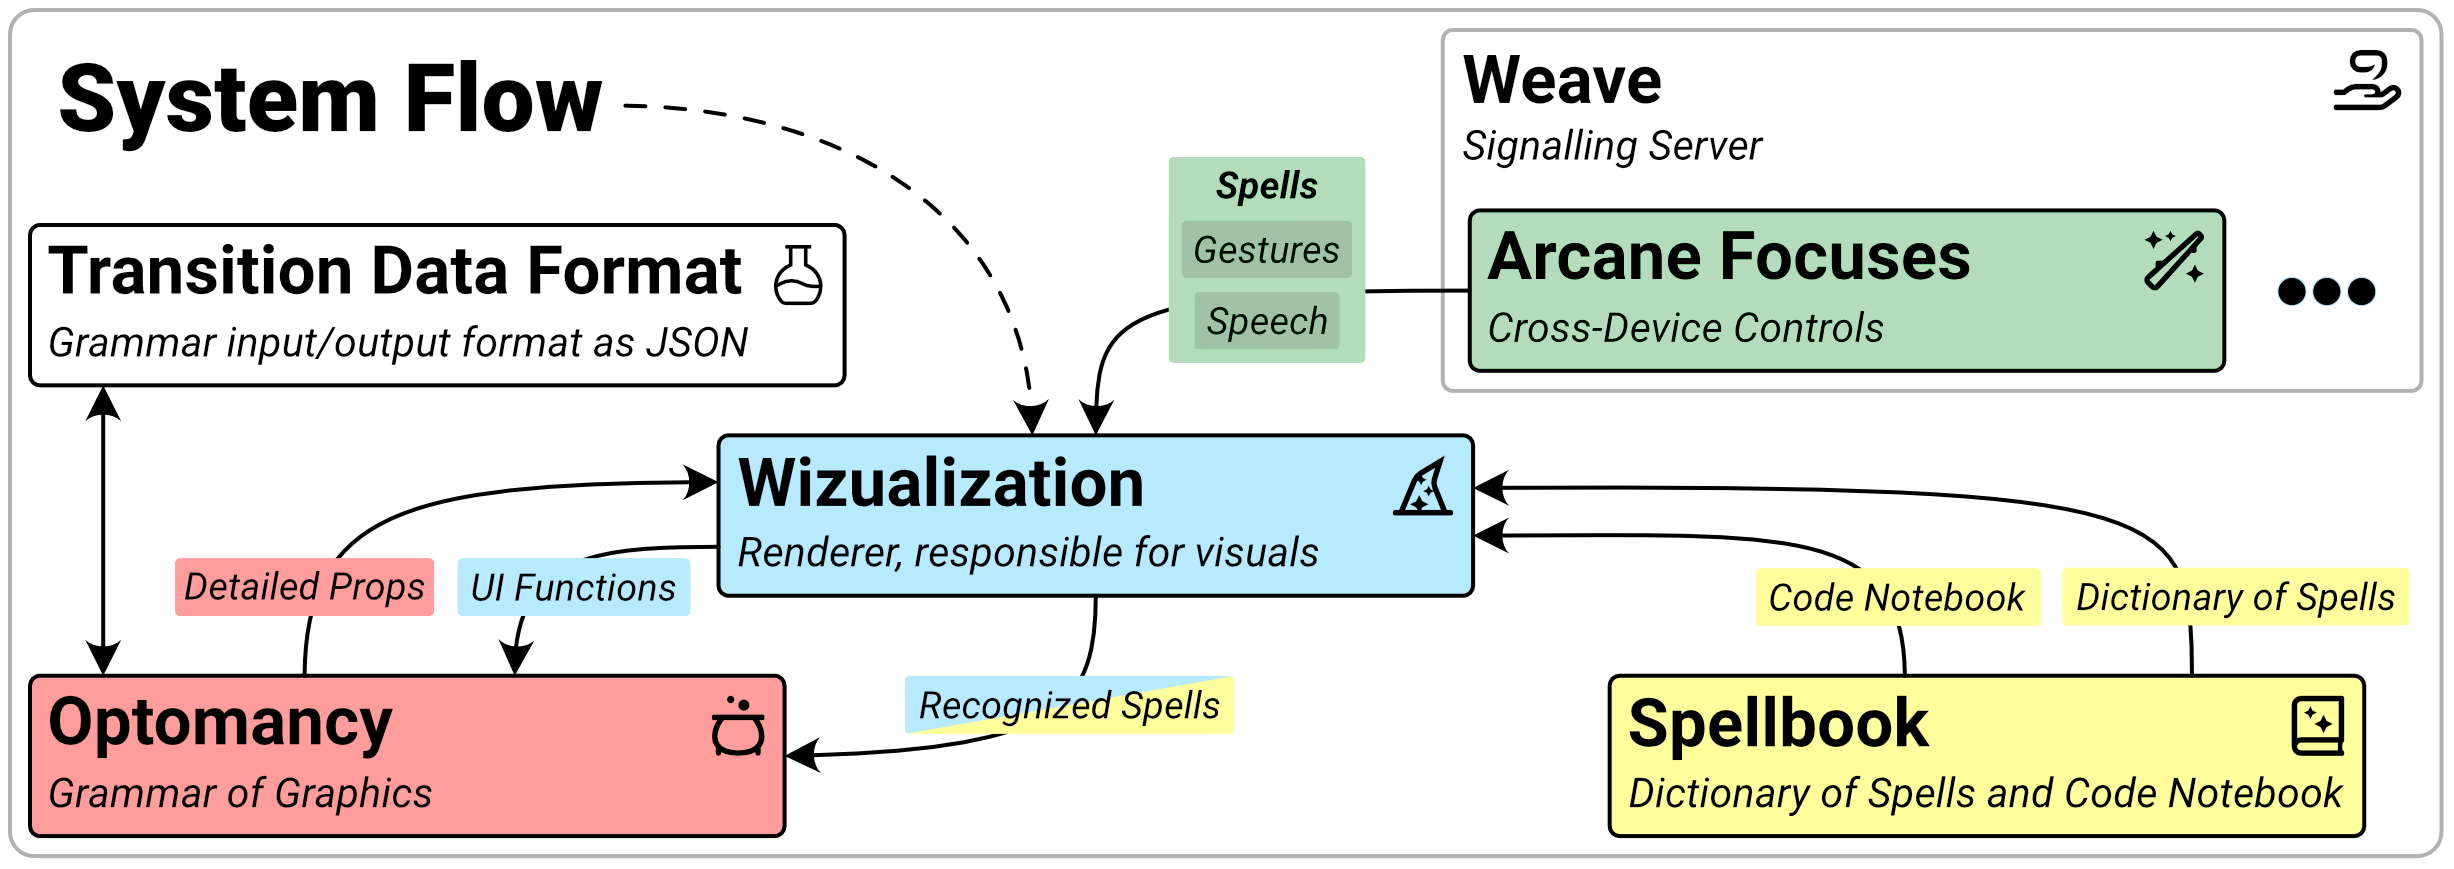 Wizualization System Overview